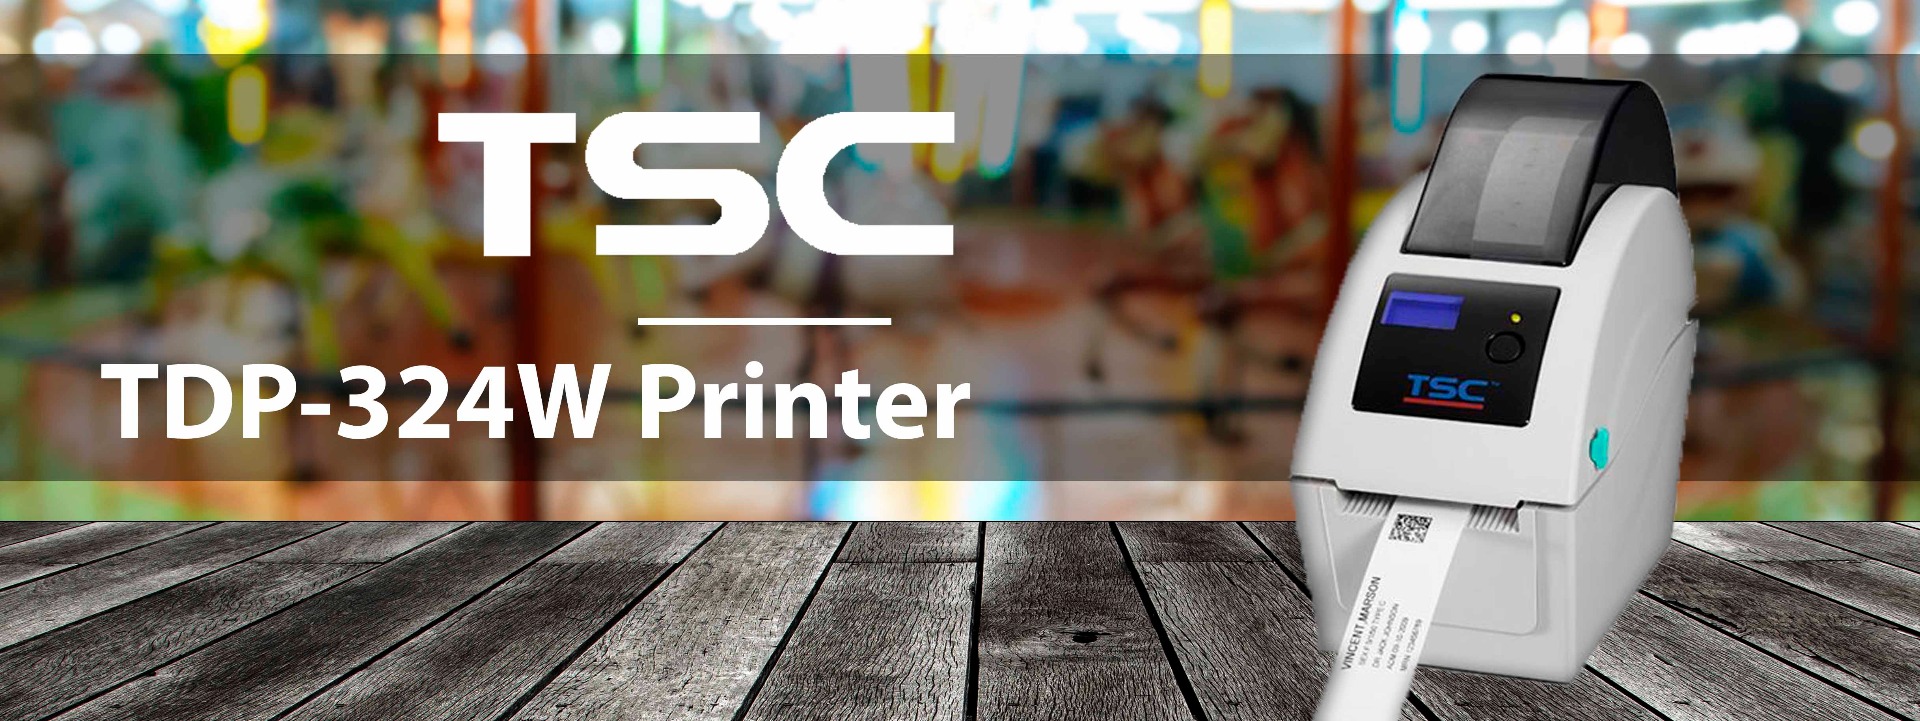 TSC TDP-324W Wristband Printer banner